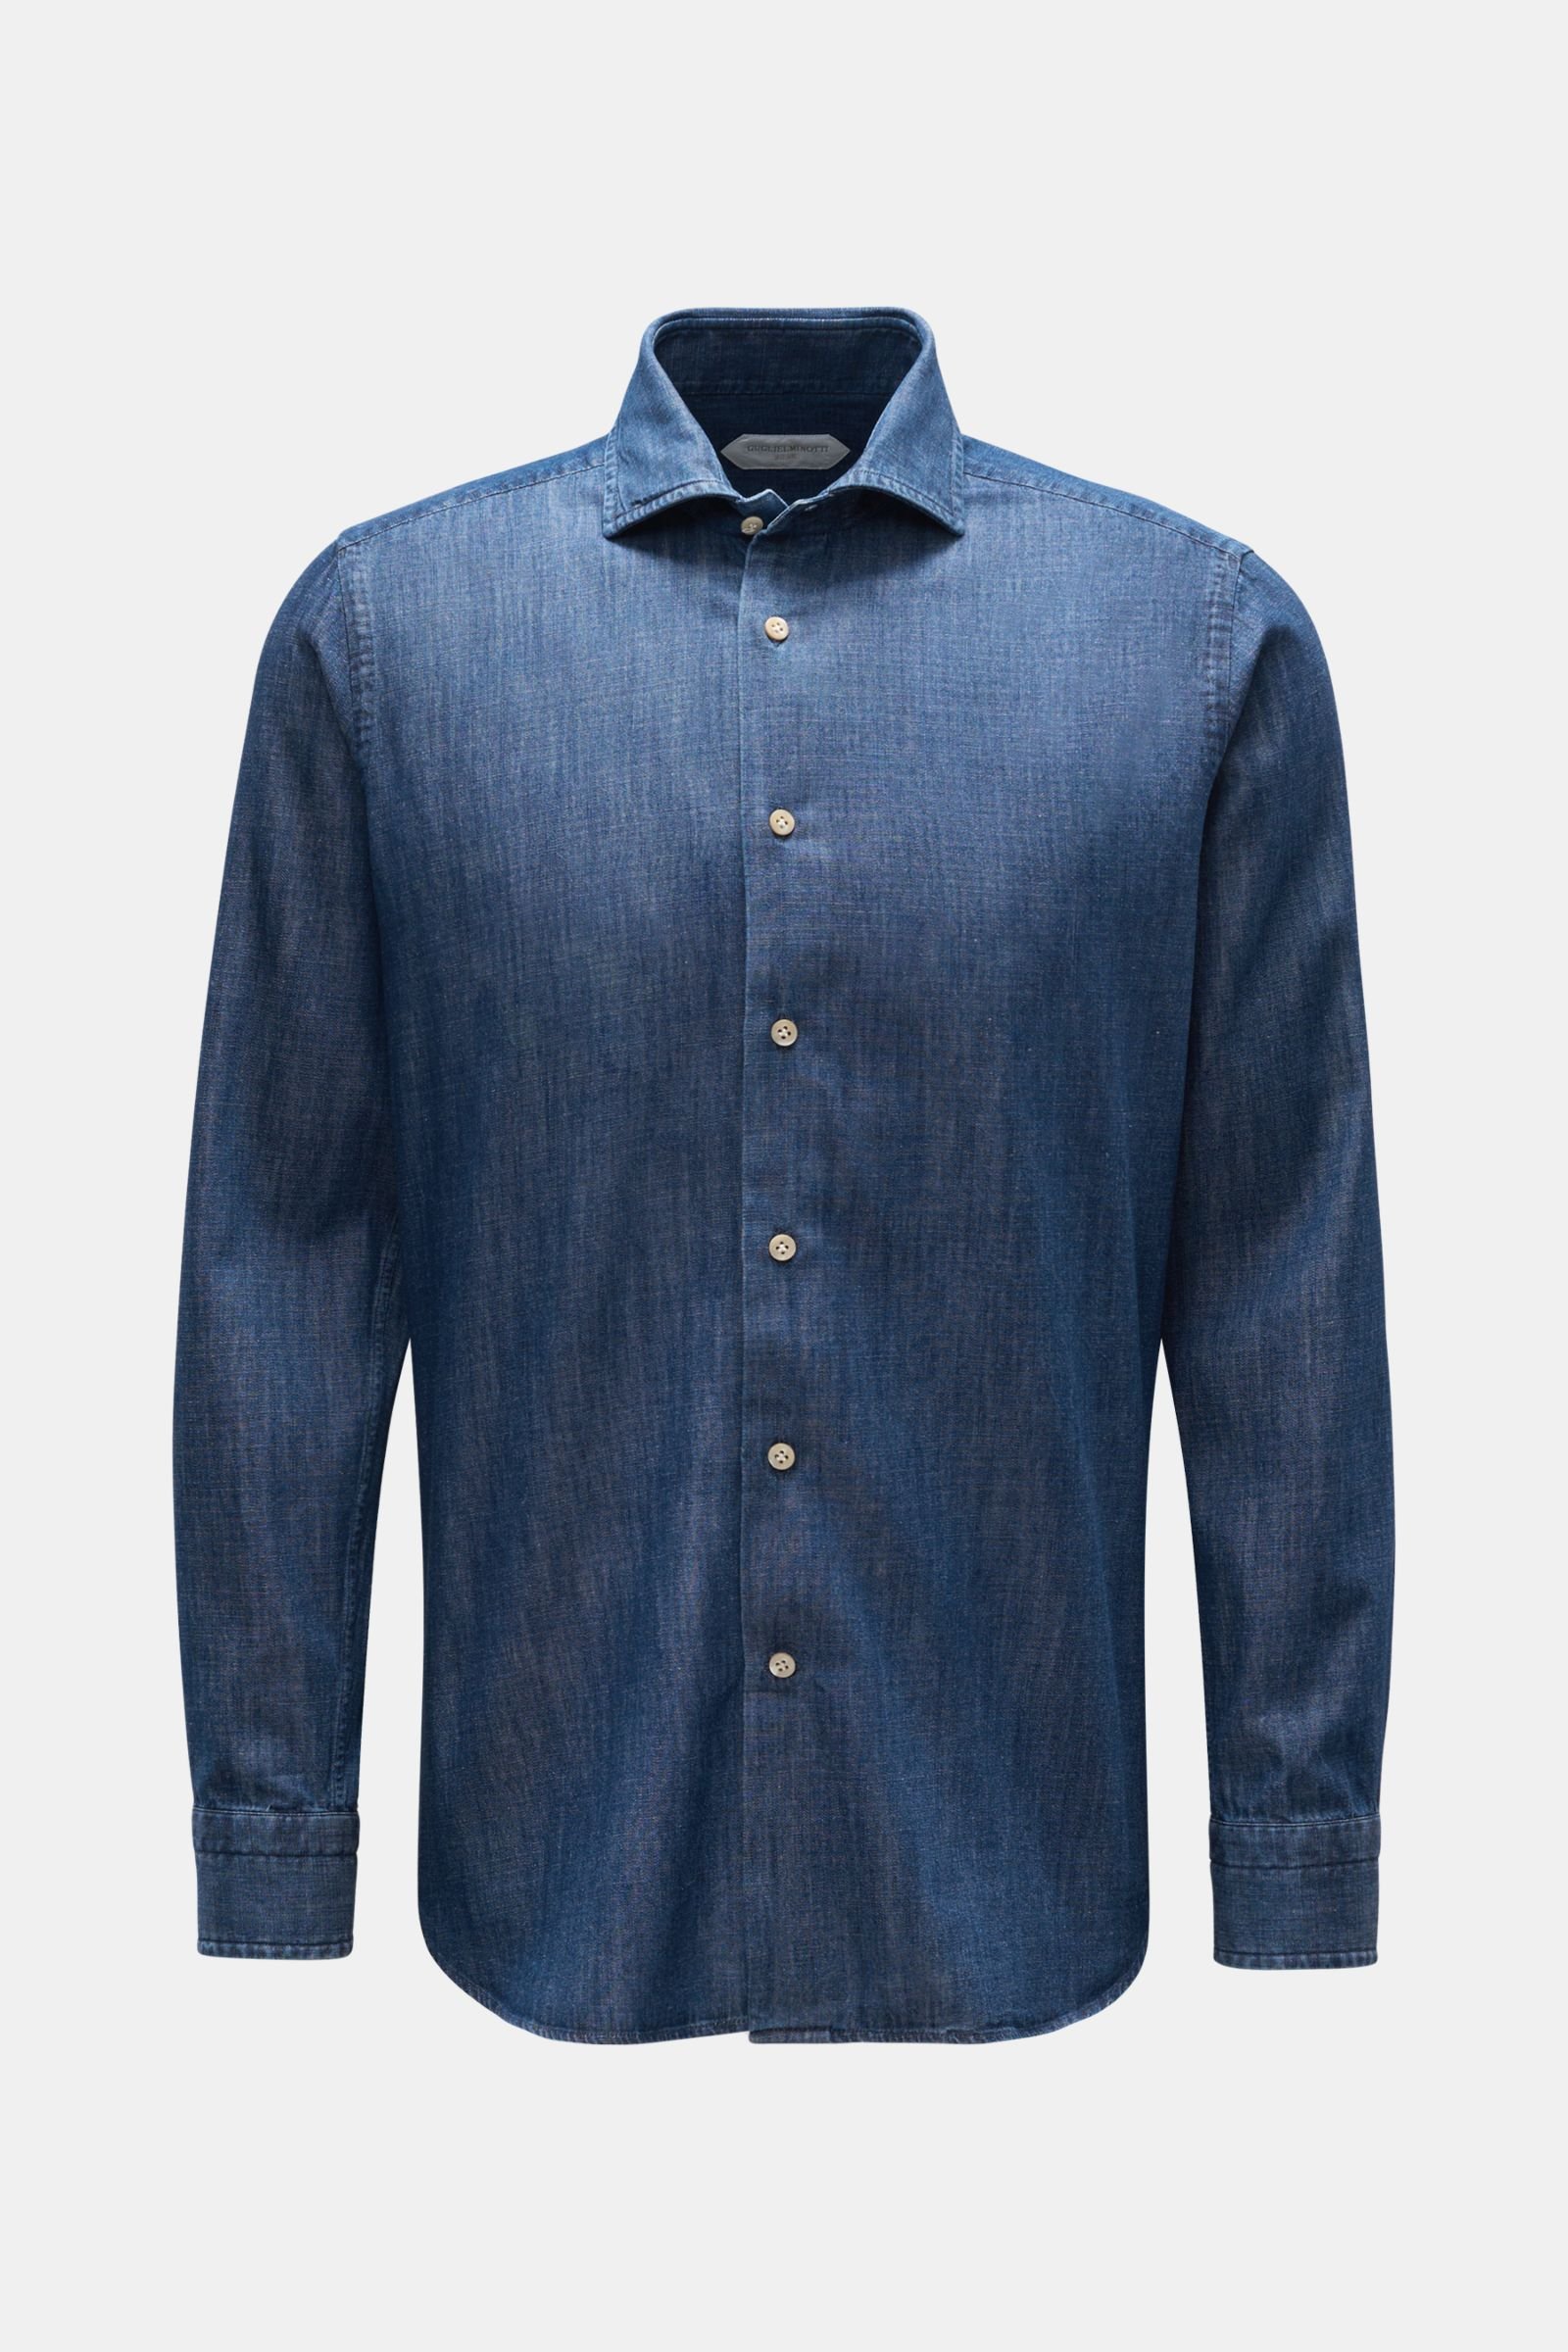 Denim shirt with slim collar grey-blue